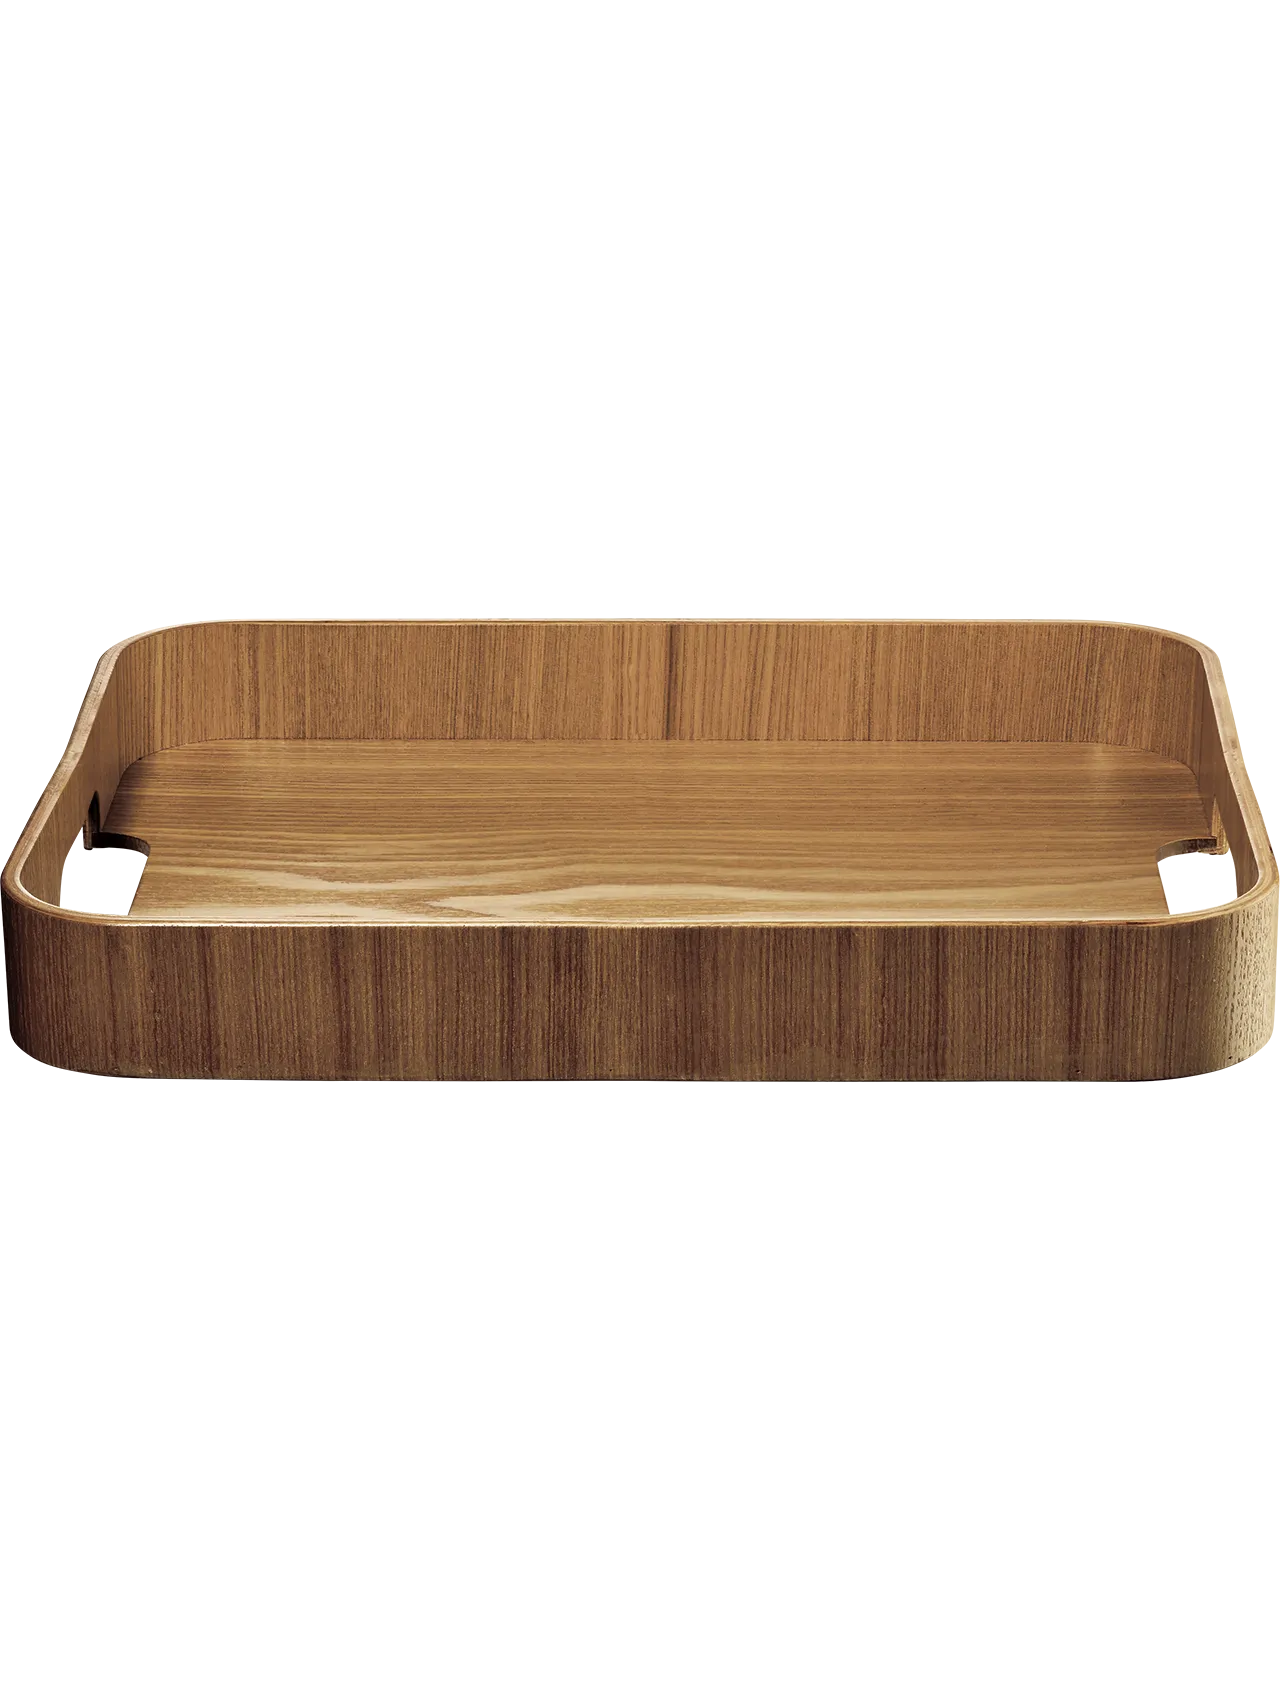 ASA wooden tray, rectangular